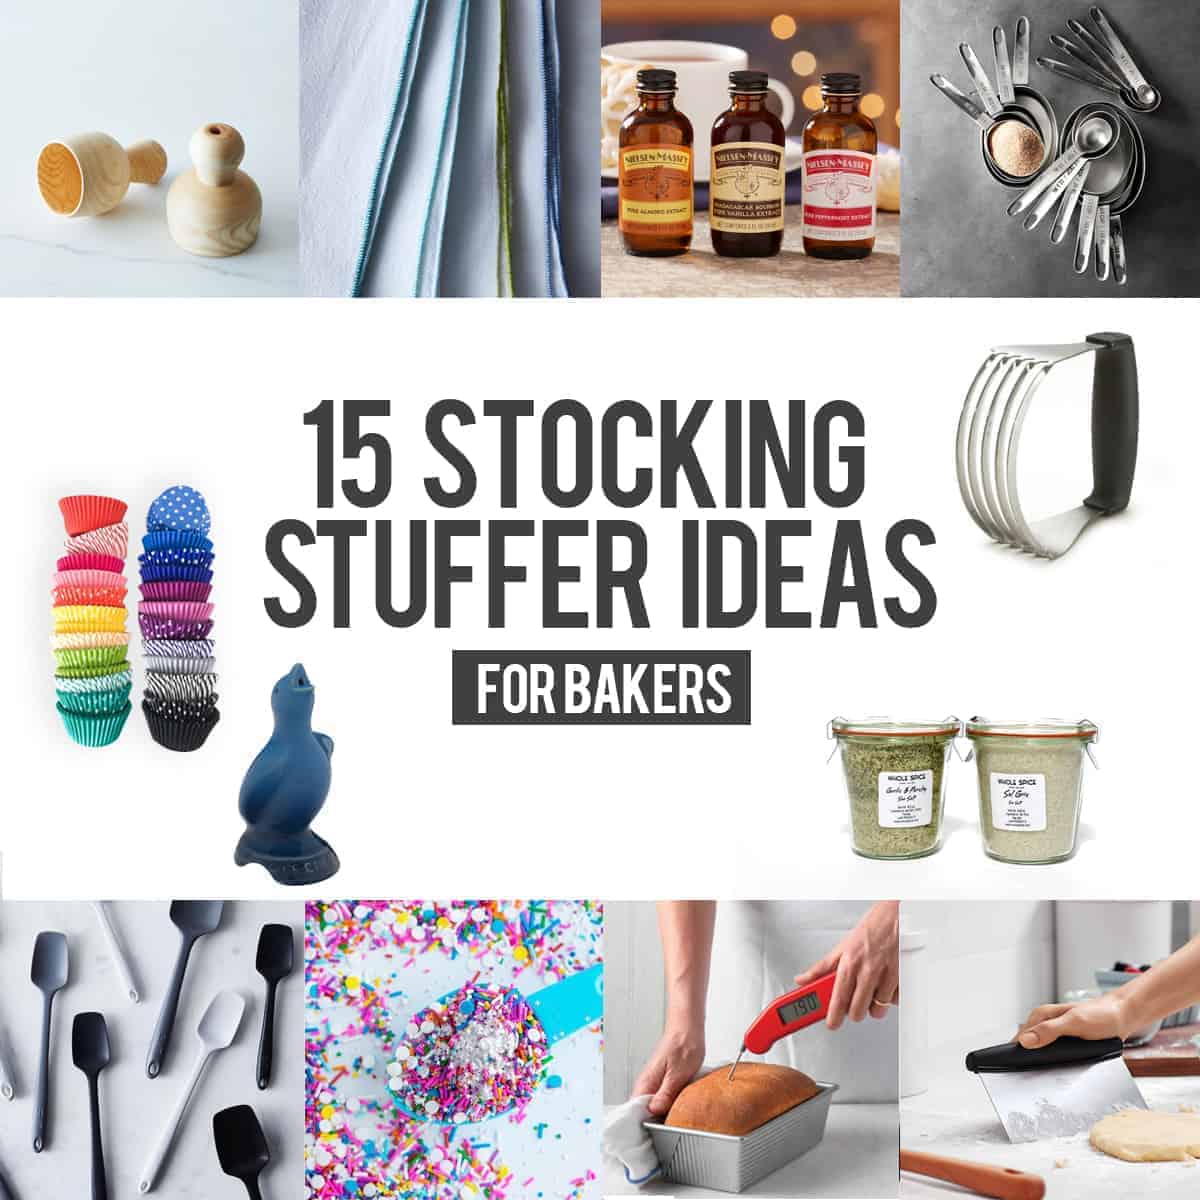 15 stocking stuffer ideas for bakers